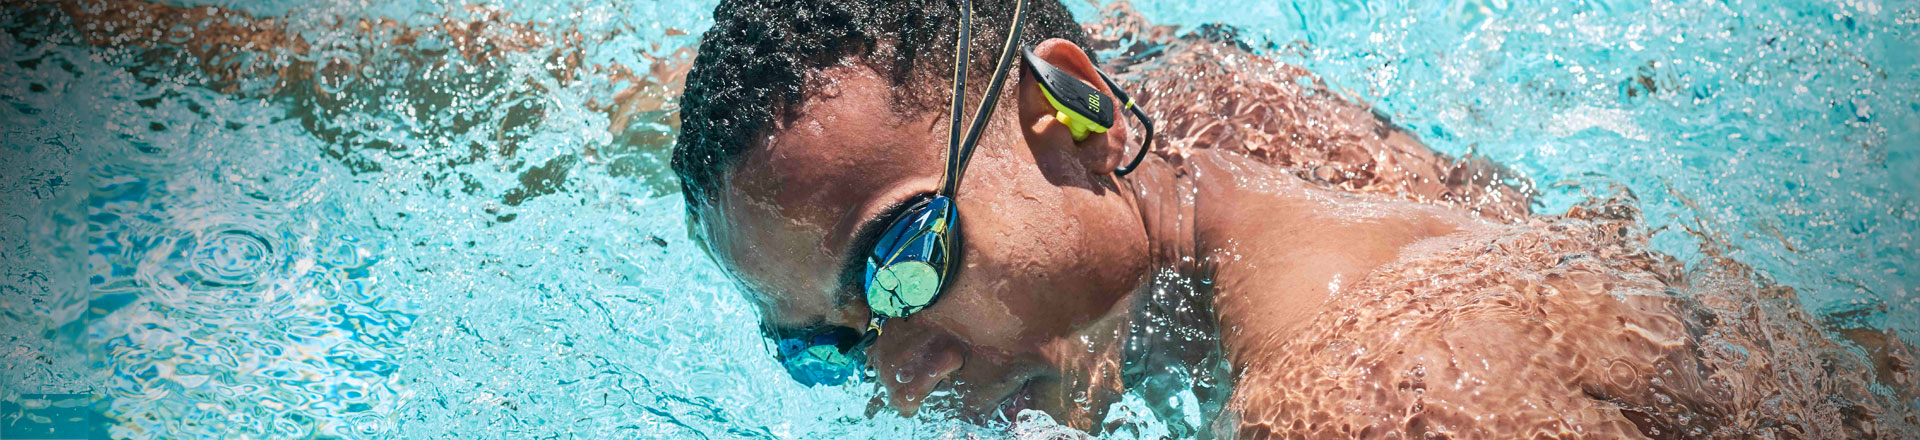 JBL: ENDURANCE DIVE słuchawki do pływania